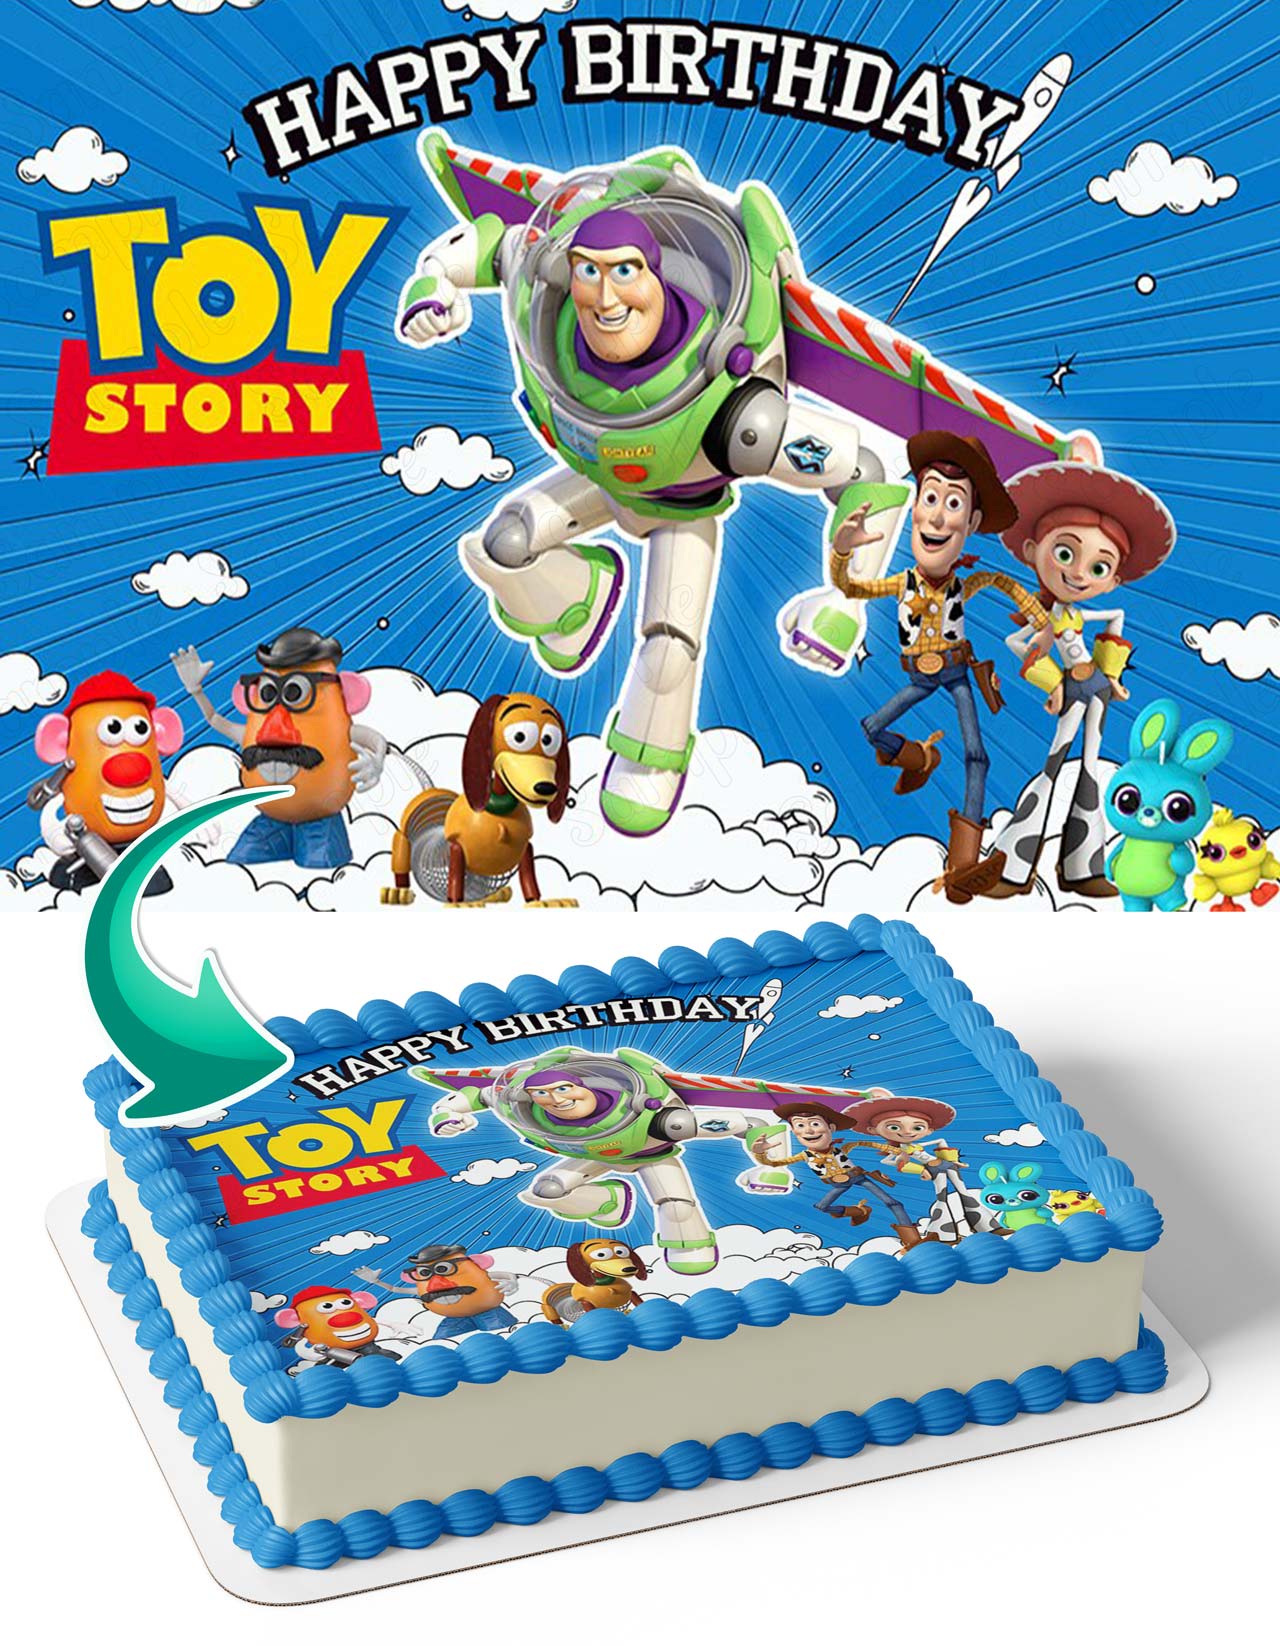 DecoPac DecoSet Toy Story 4 Team Toy Cake Decorations, 1 ct - Ralphs